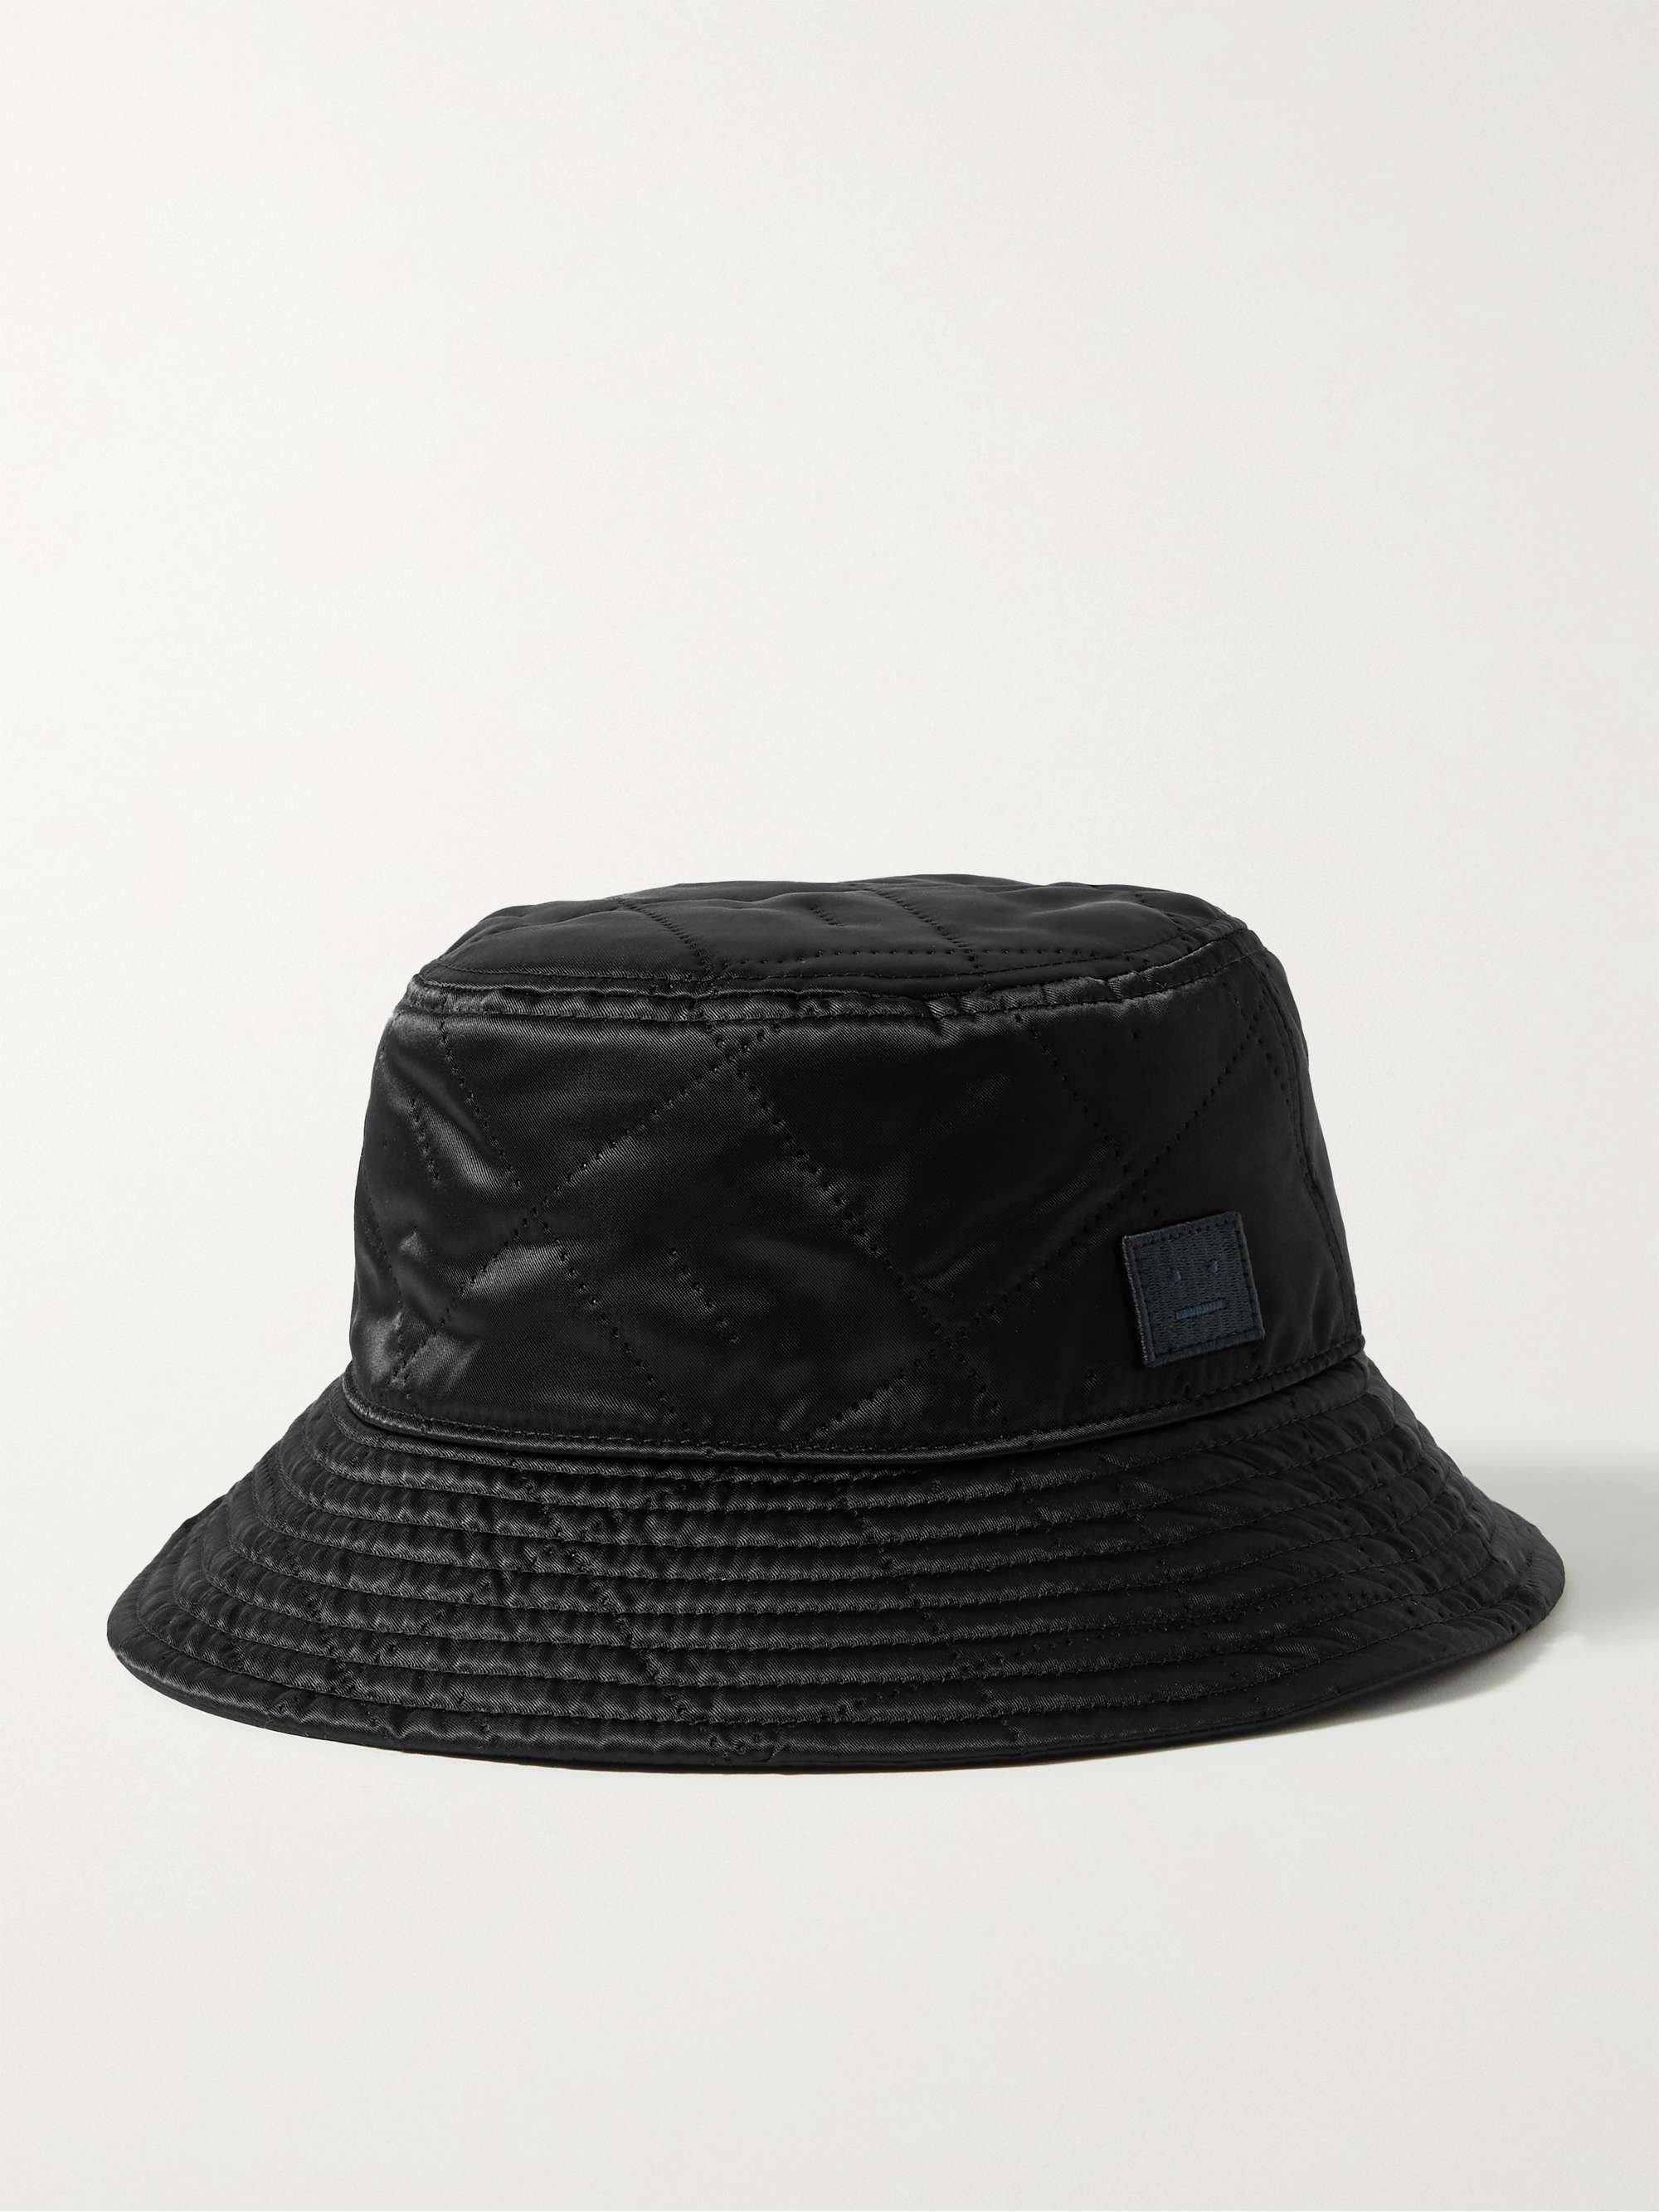 ACNE STUDIOS Logo-Appliquéd Quilted Shell Bucket Hat | MR PORTER